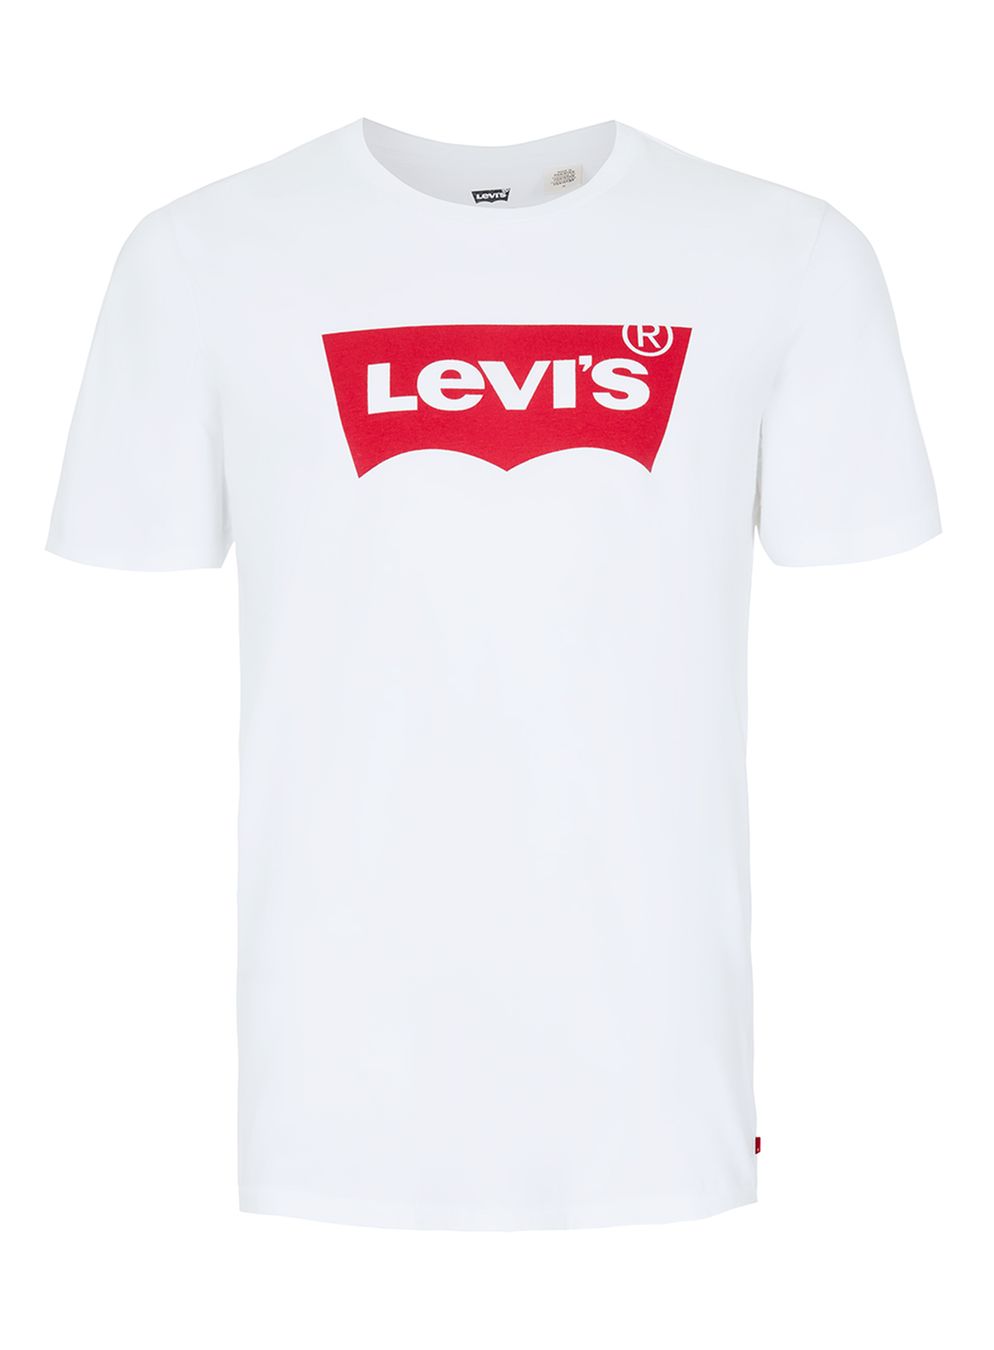 Levis white T-shirt - Basic tees shop